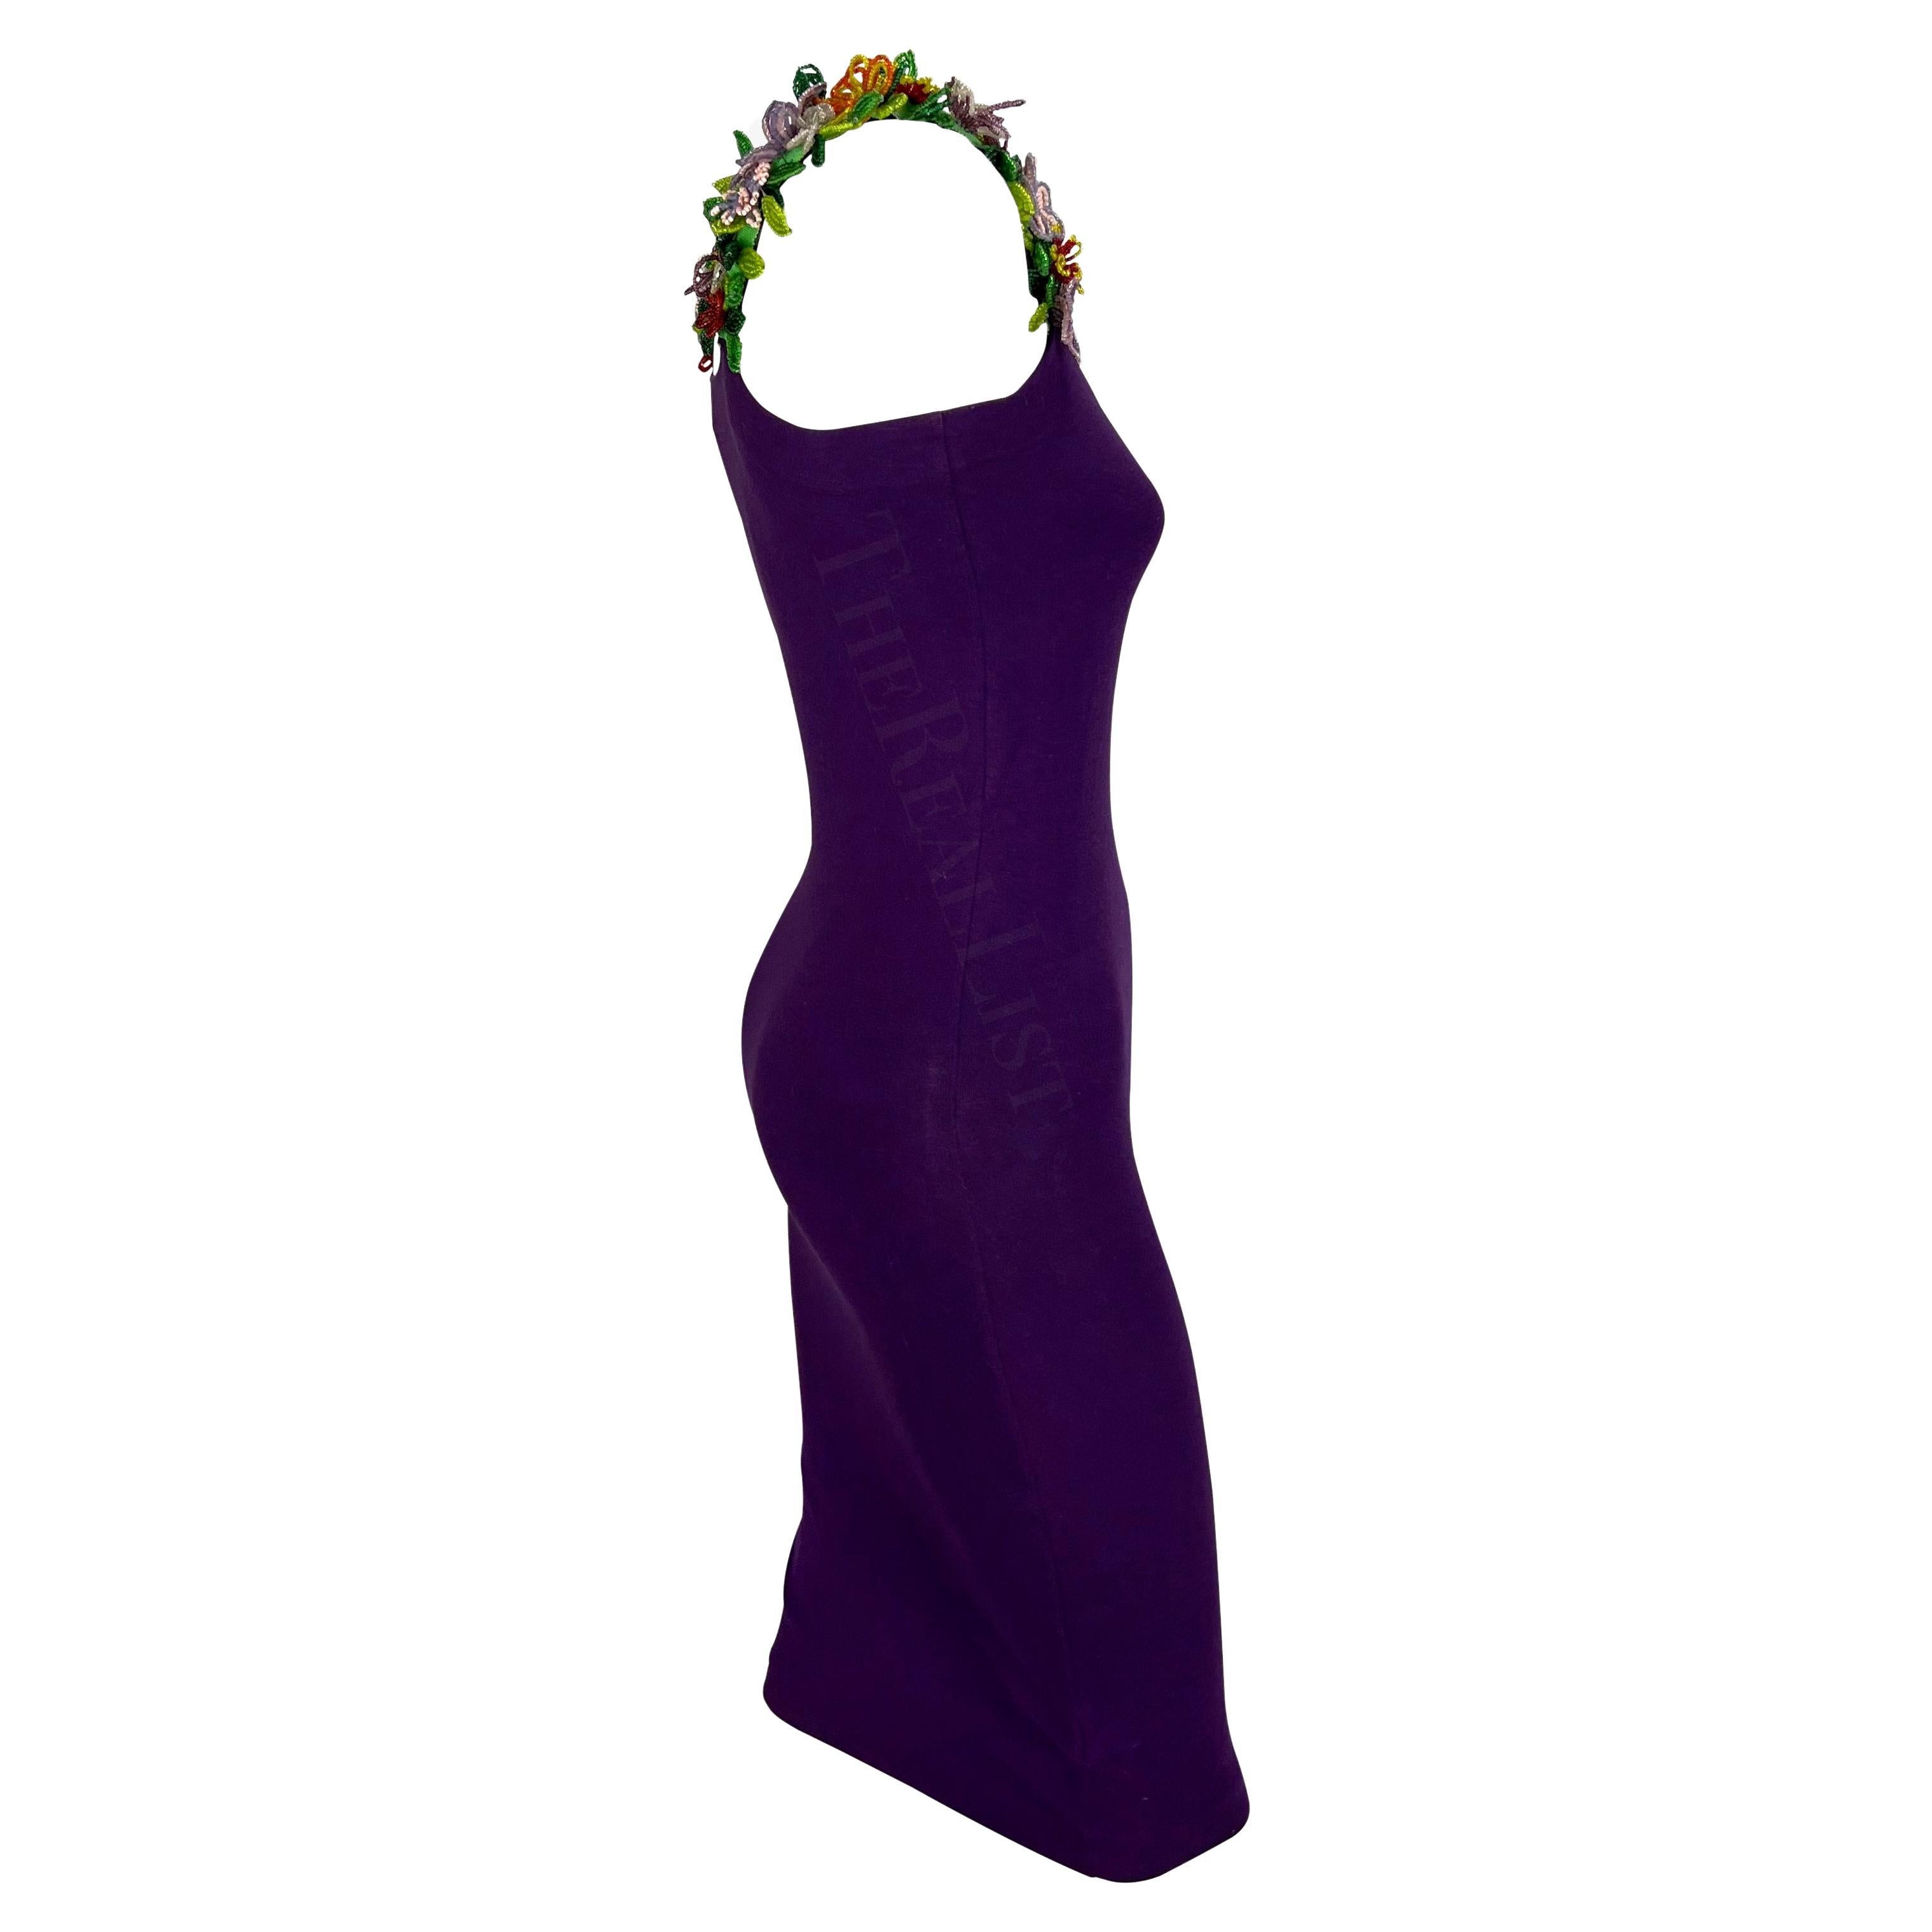 S/S 1992 Dolce & Gabbana Purple Mini Dress Floral Beaded Straps 6